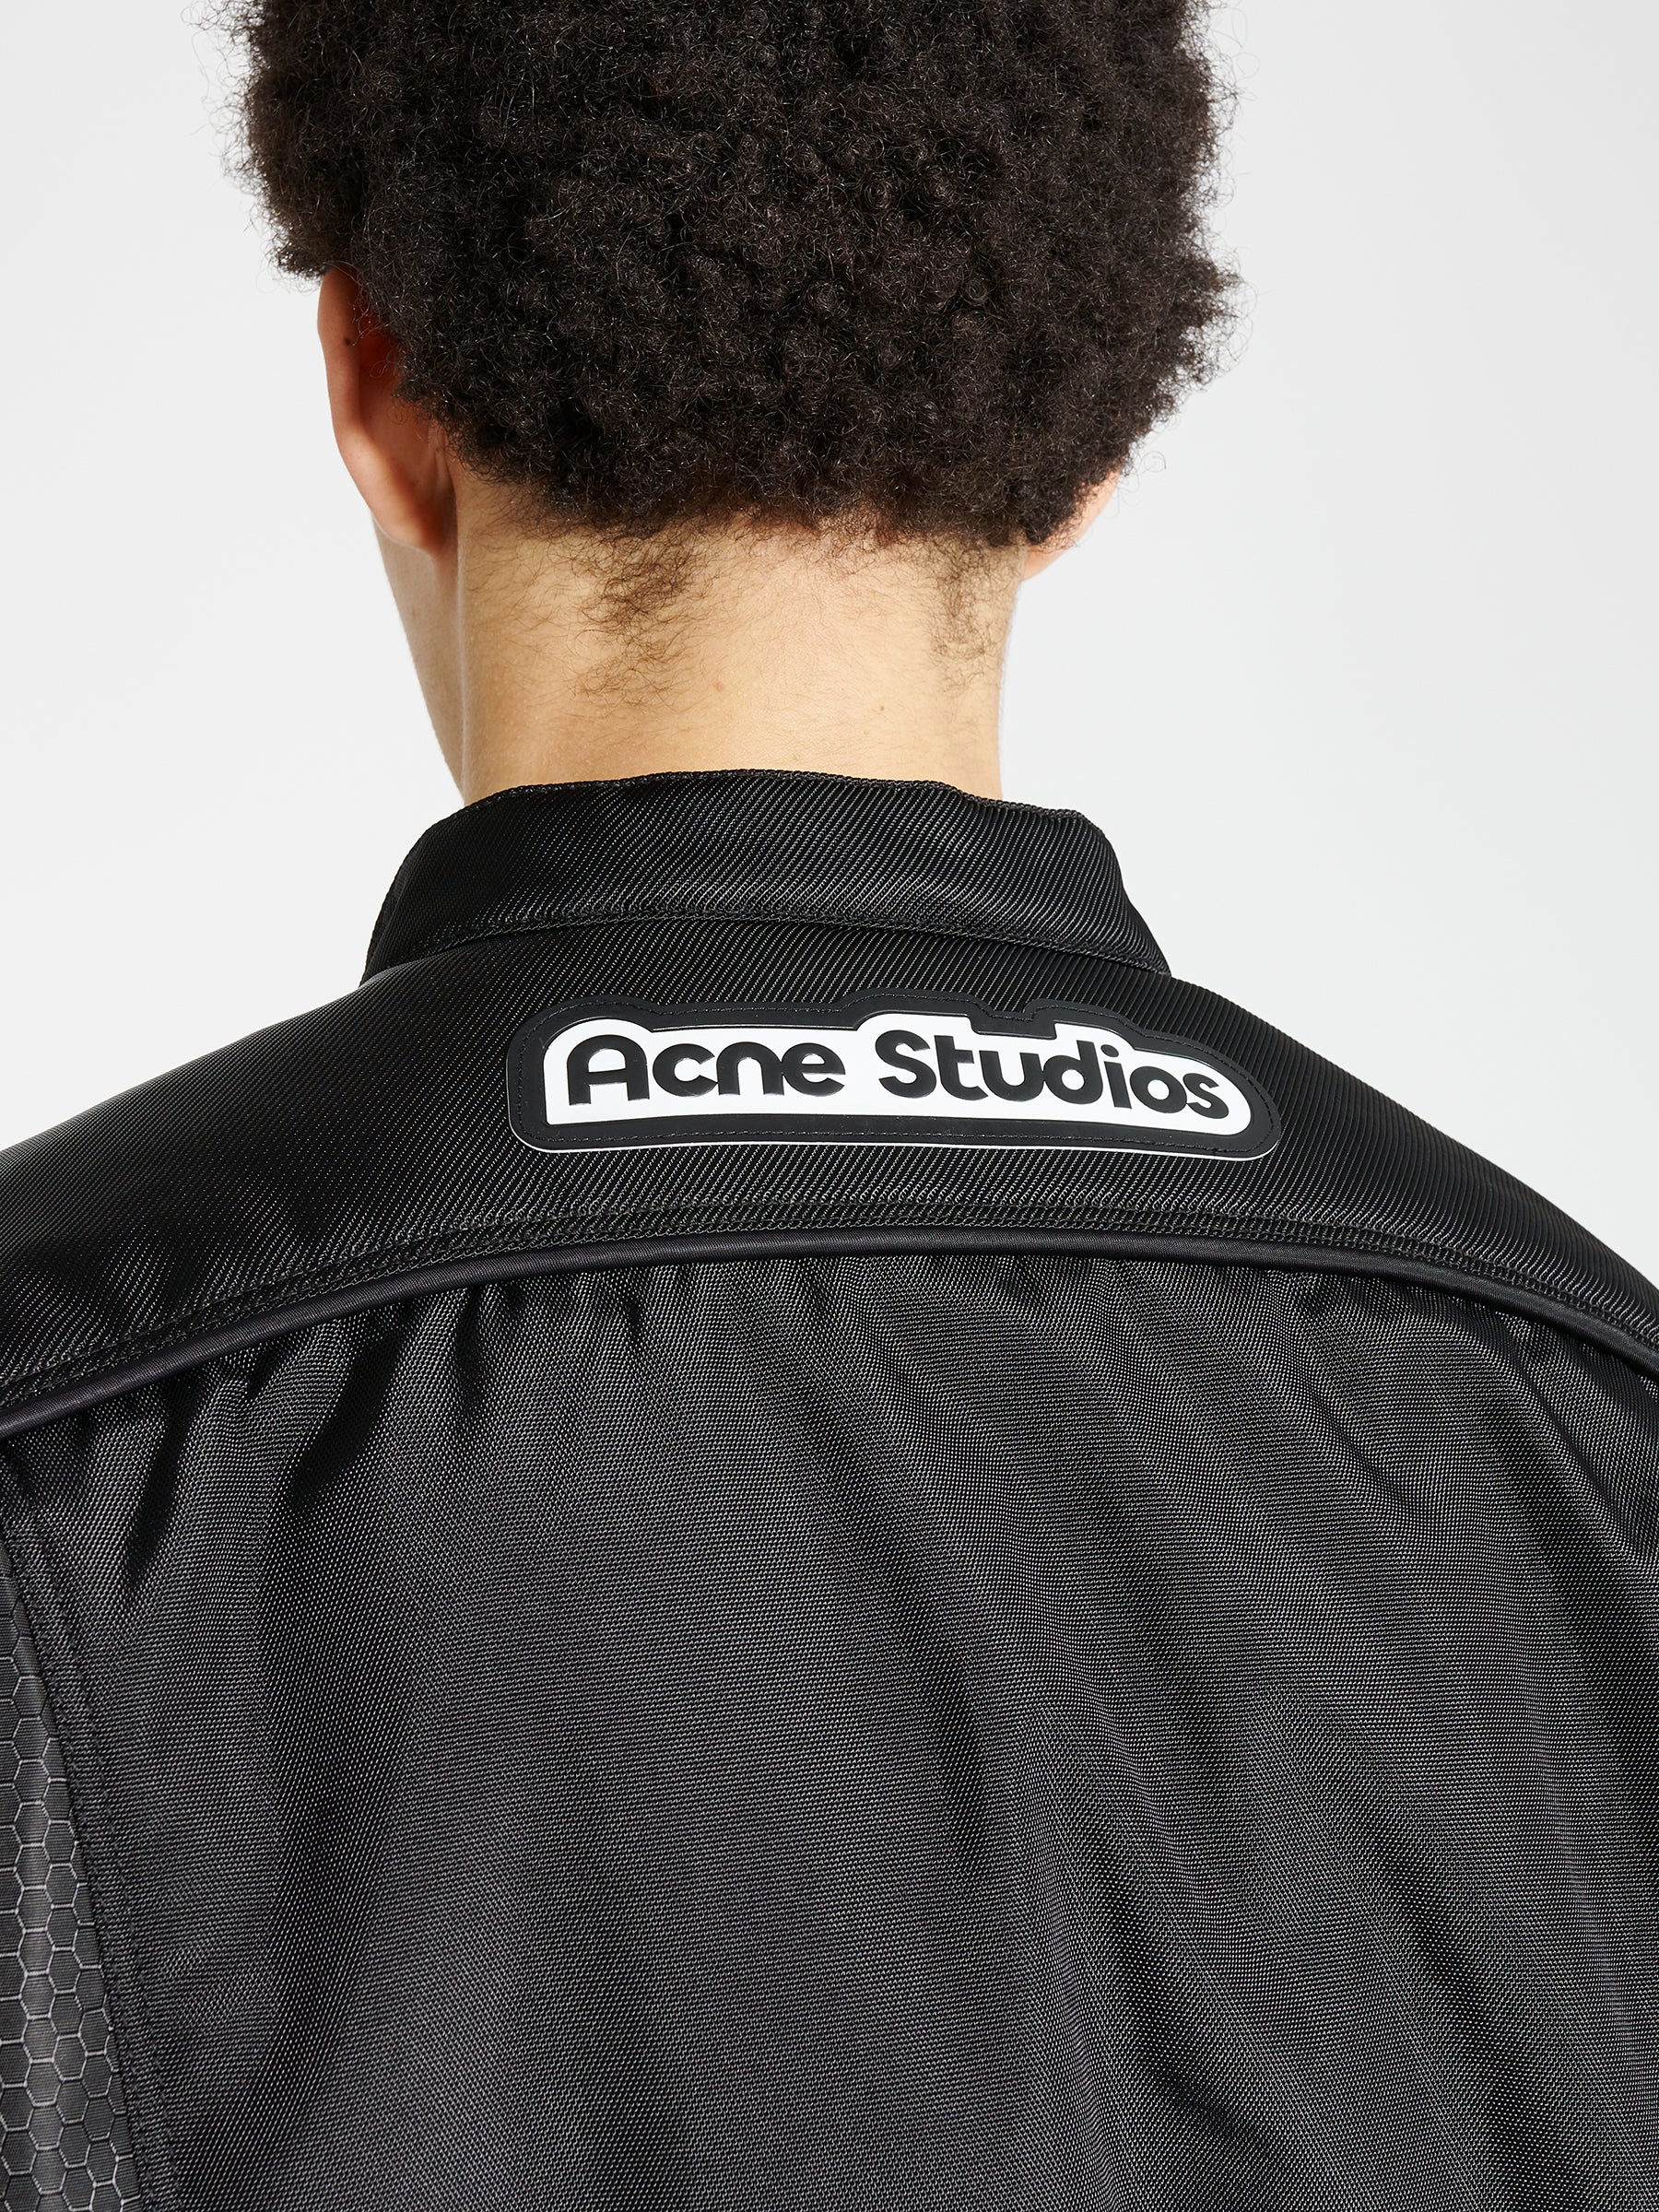 Acne Studios Bomber Jacket Black